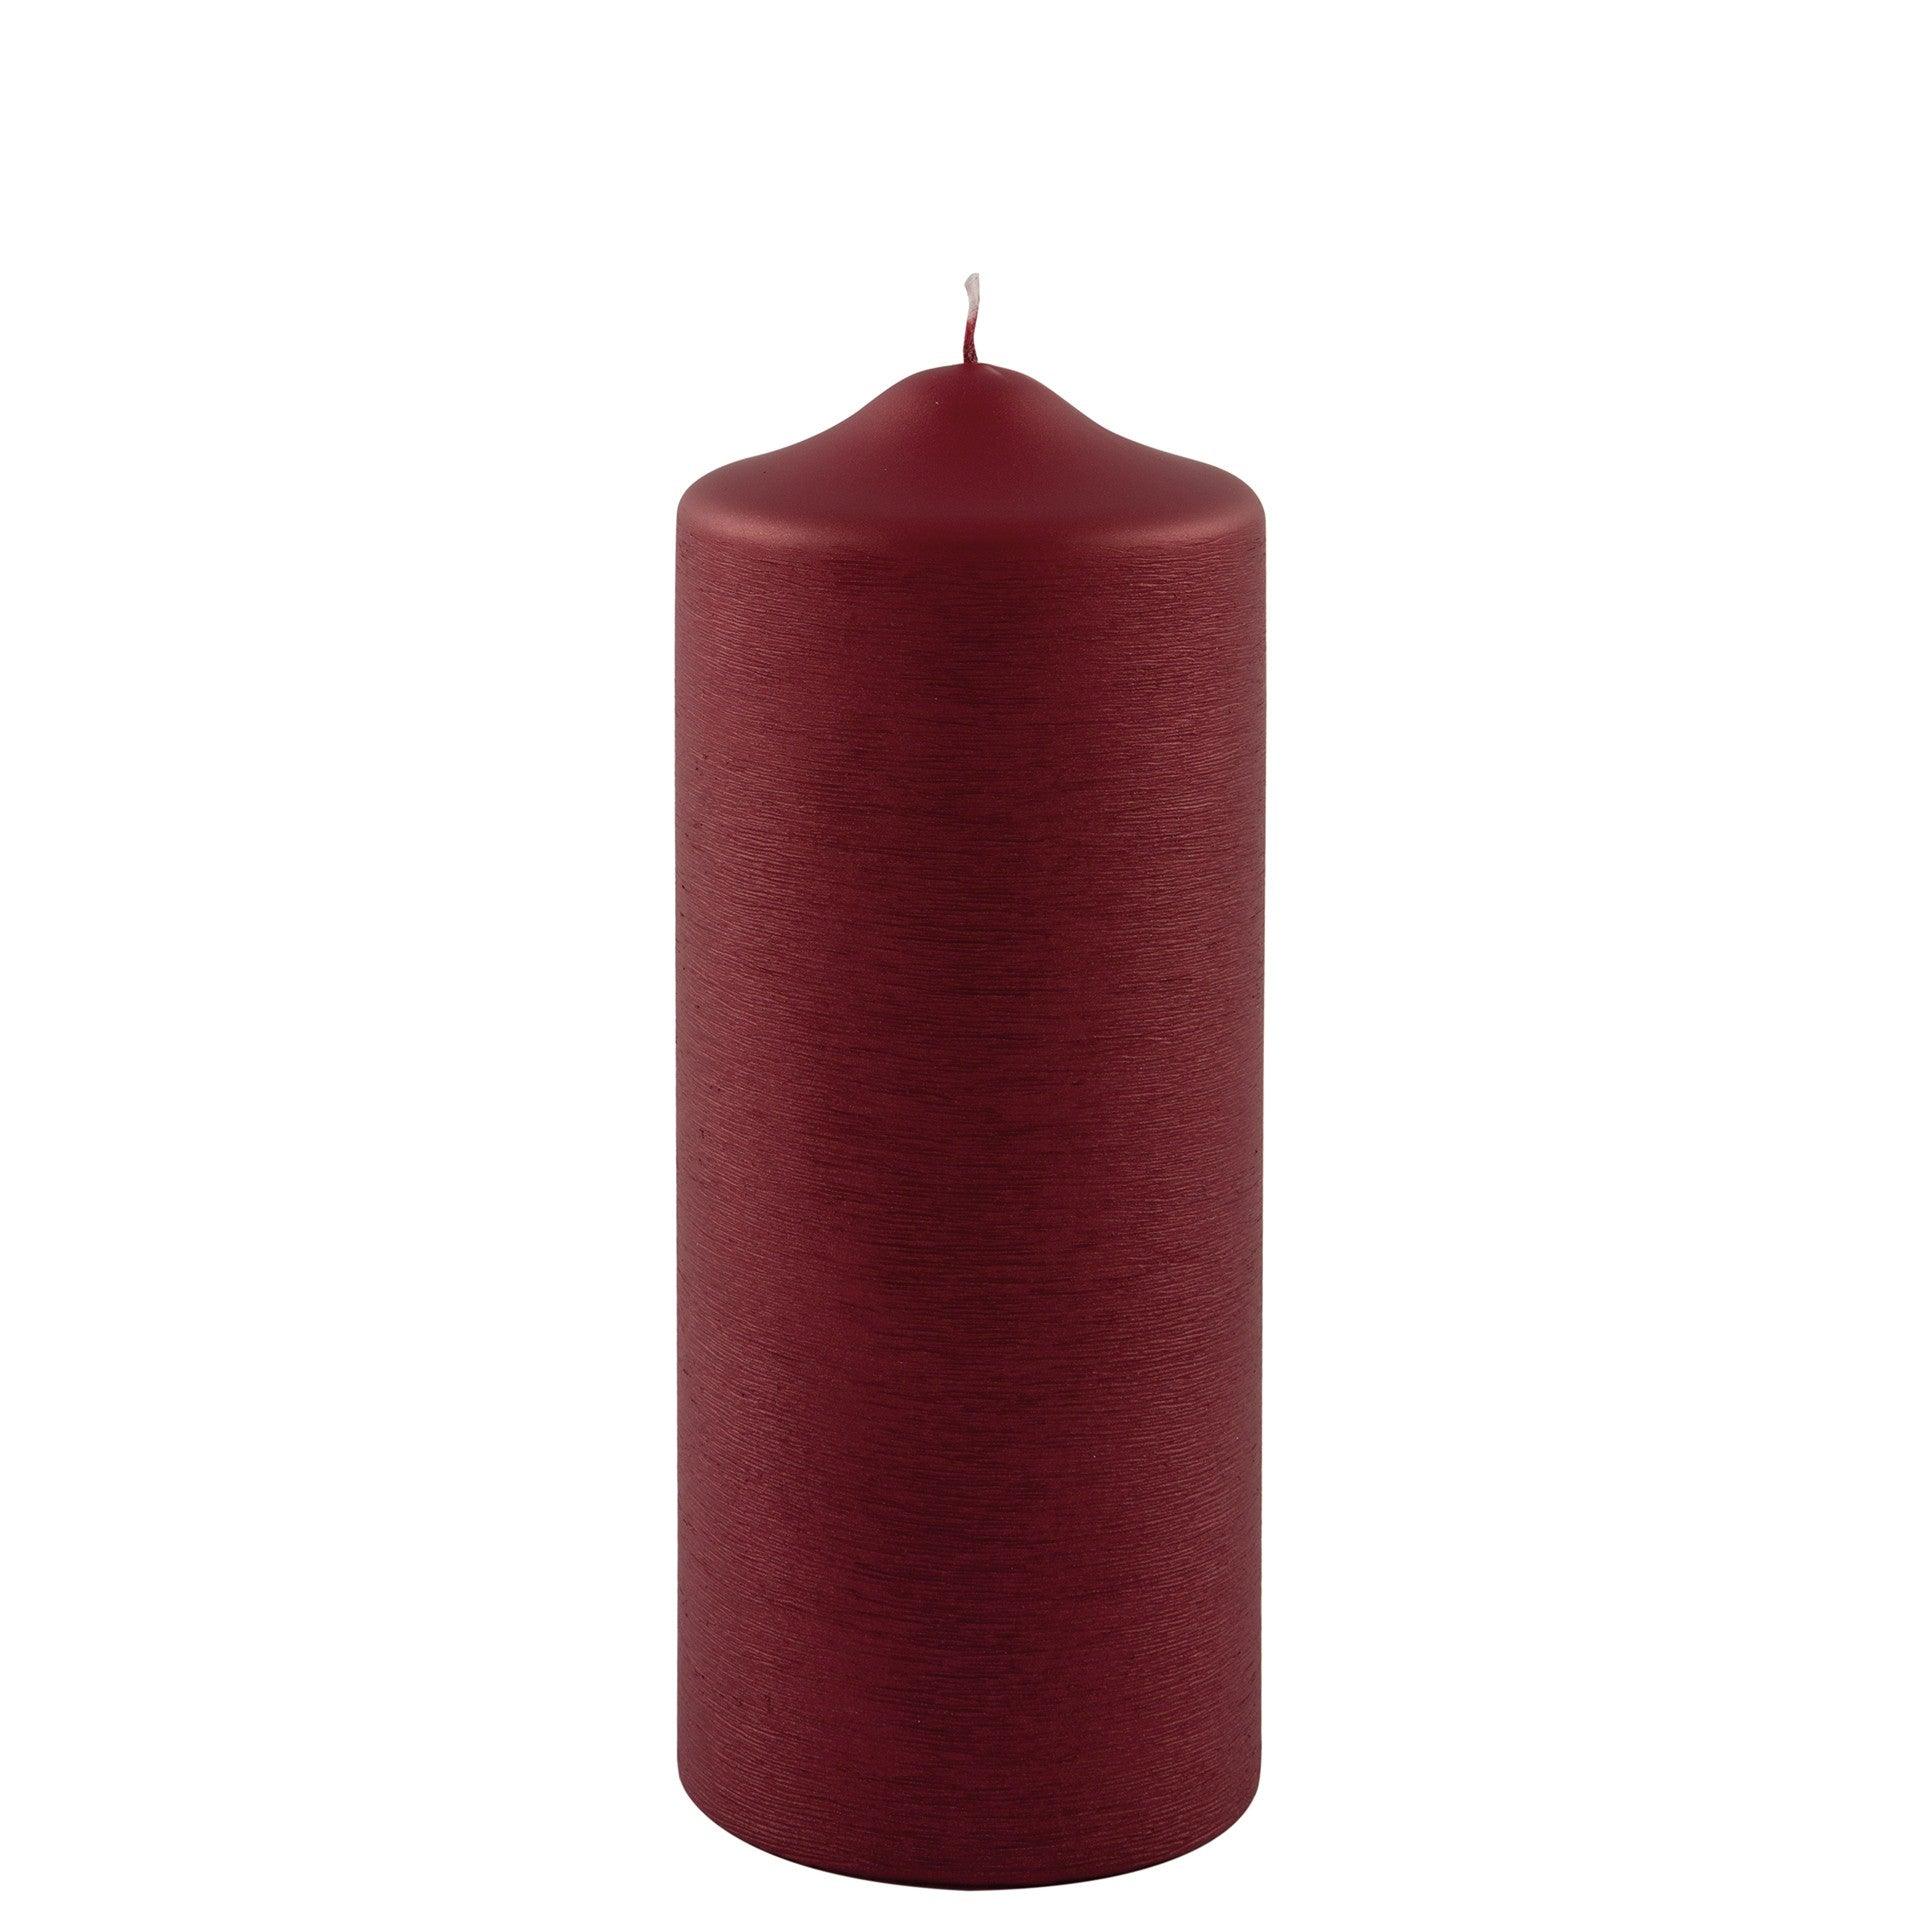 Fink Candle Stumpenkerze gebürstet metallic rot 20cm - HomeDesign Knaus wir schaffen Inspirationen 